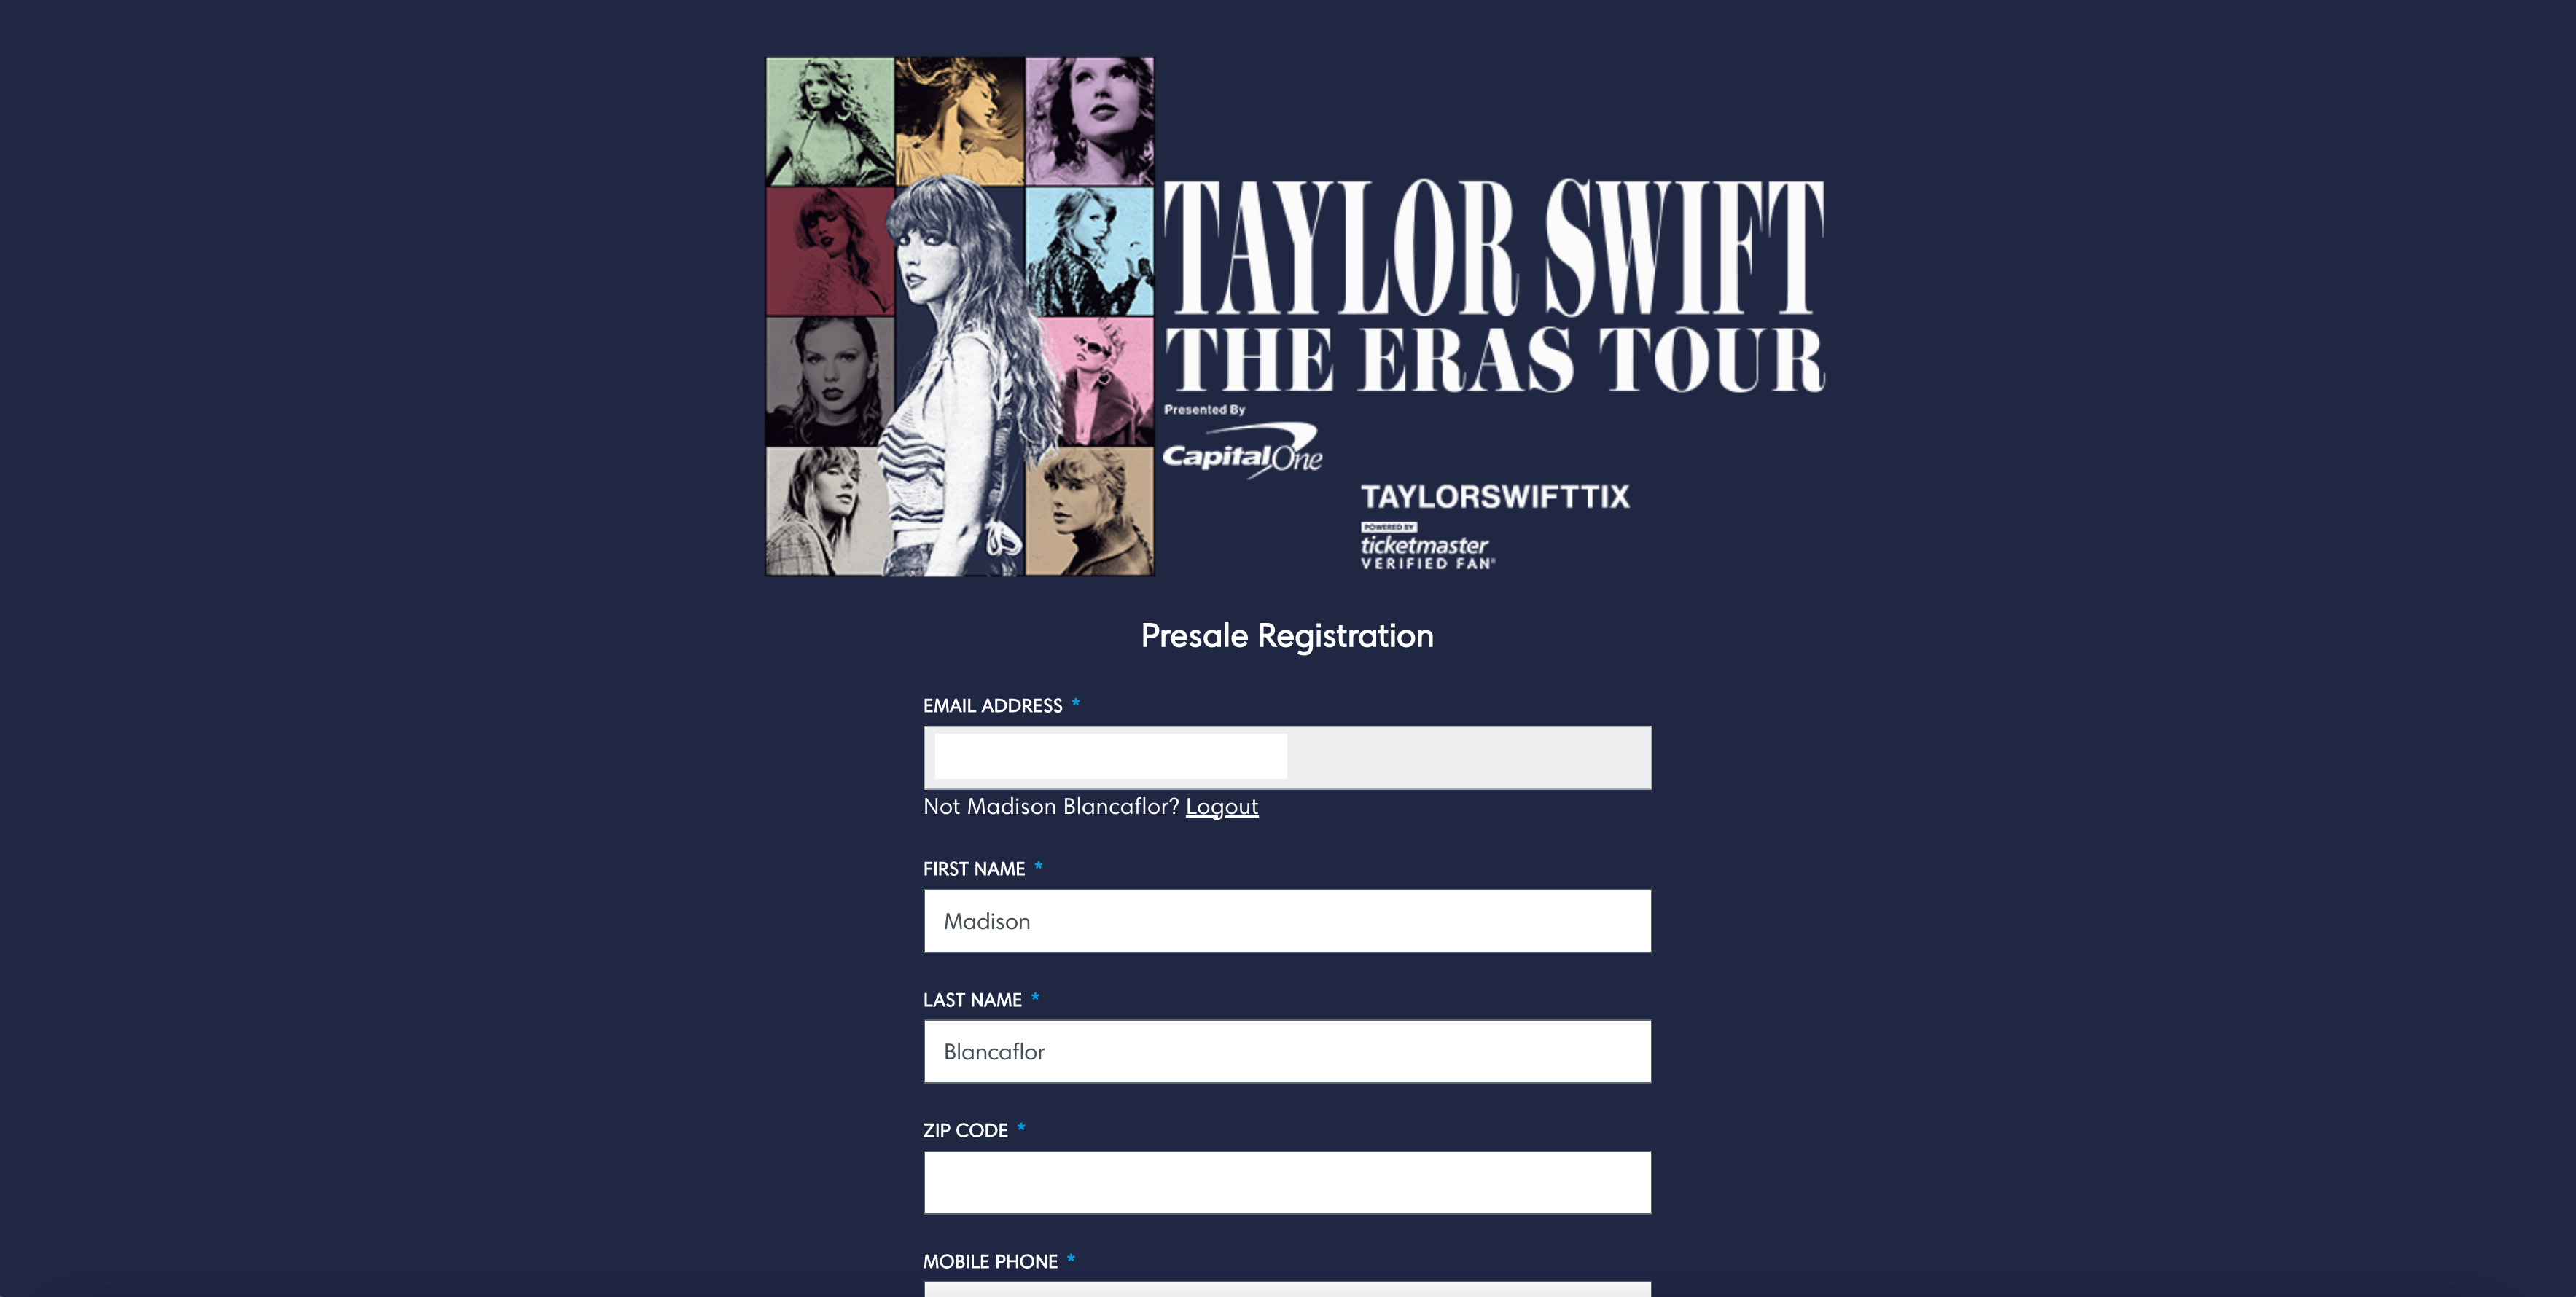 Taylor Swift "The Eras Tour" Verified Fan Registration